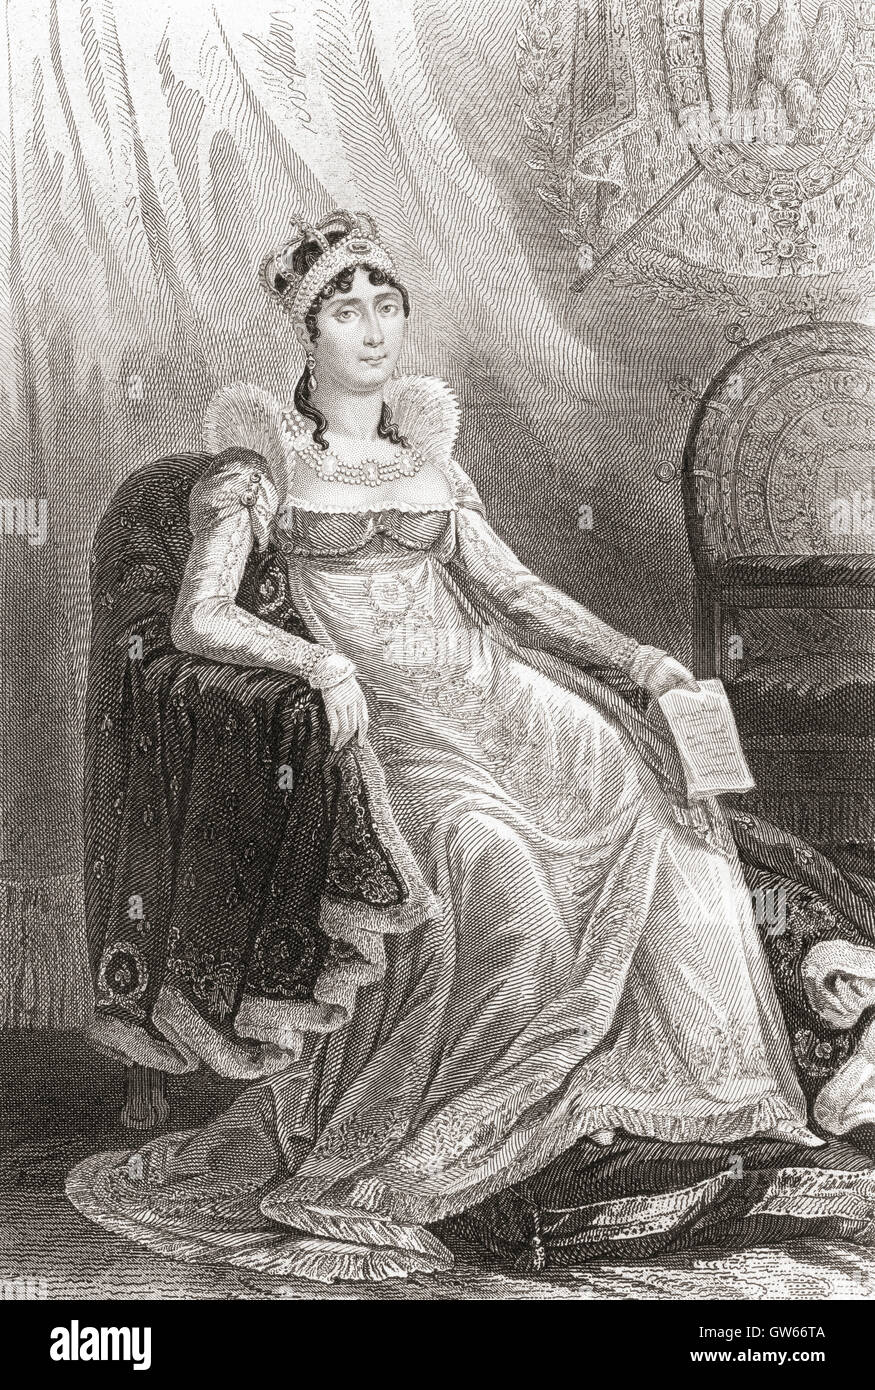 Joséphine de Beauharnais, née Tascher de la Pagerie, 1763 - 1814. Prima moglie di Napoleone I e prima Imperatrice del francese. Foto Stock